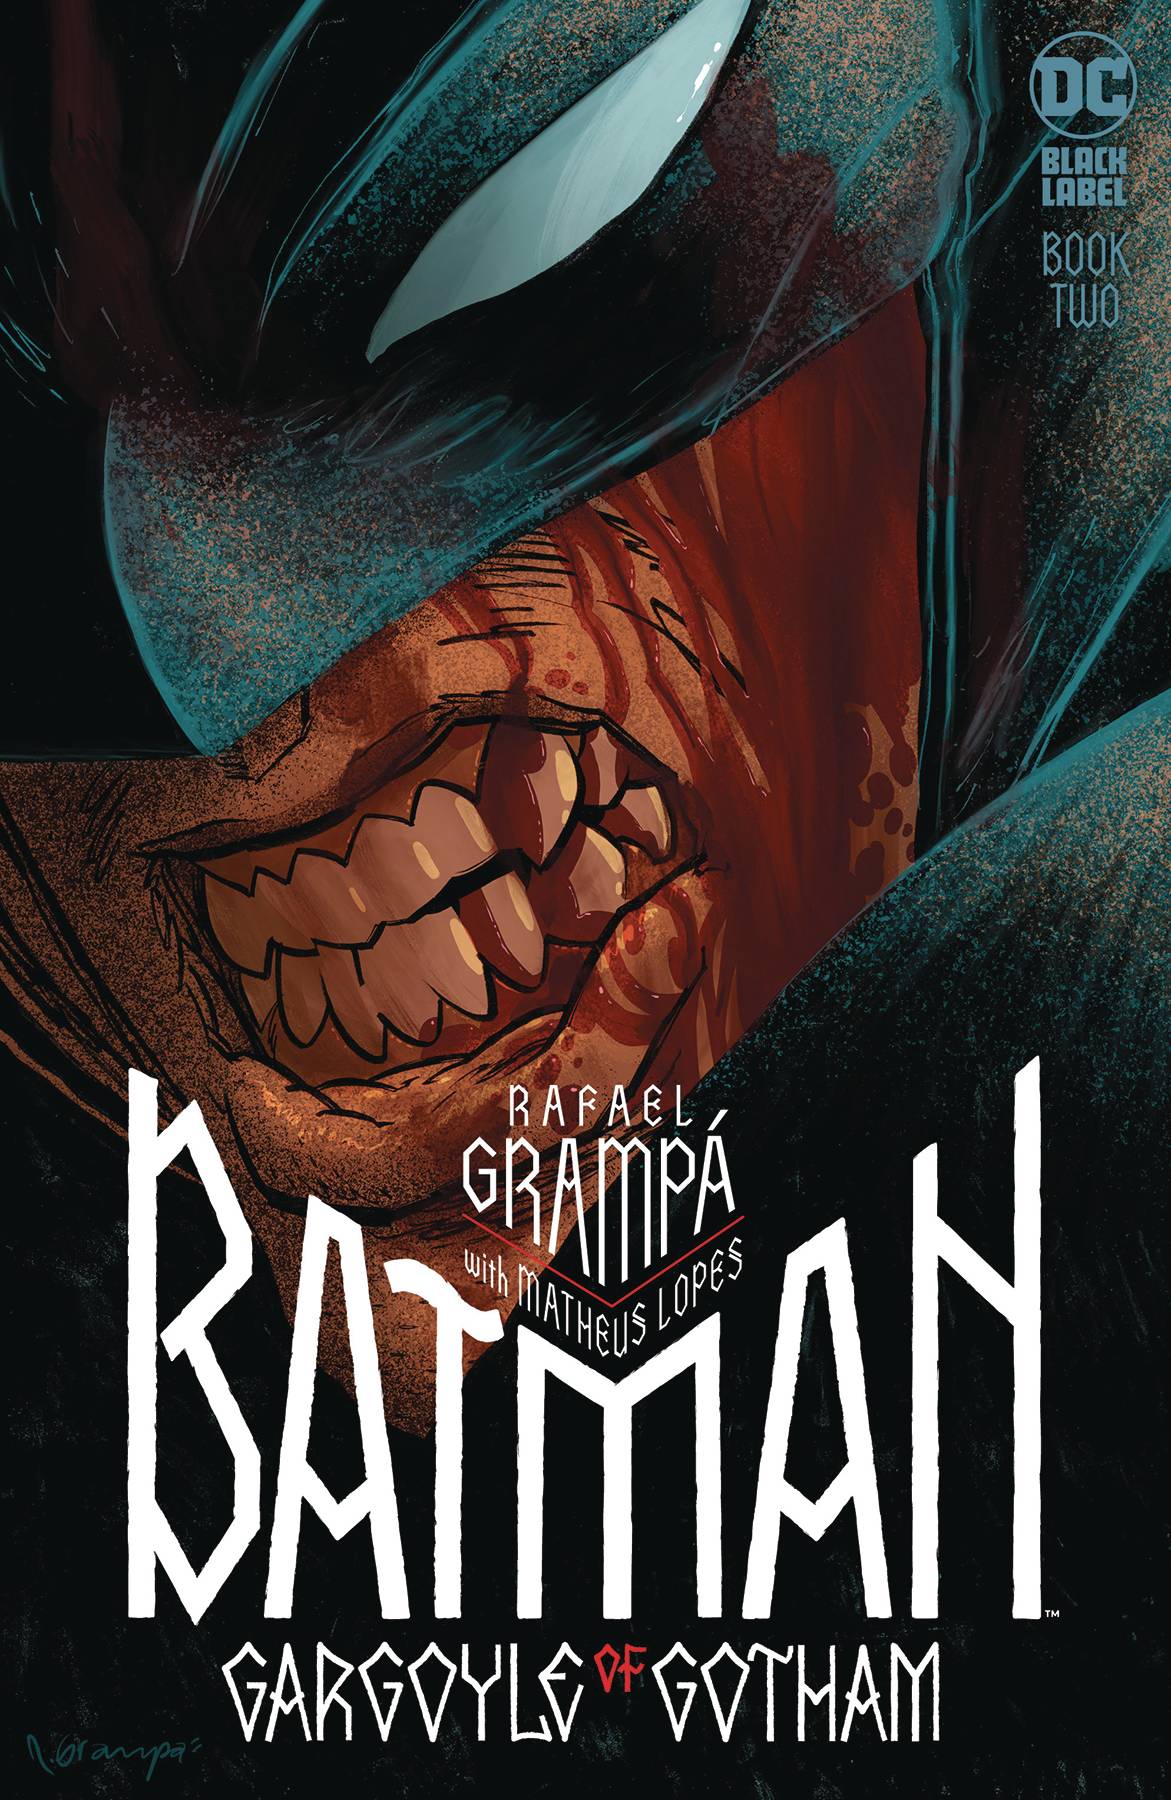 BATMAN GARGOYLE OF GOTHAM #2 (OF 4)